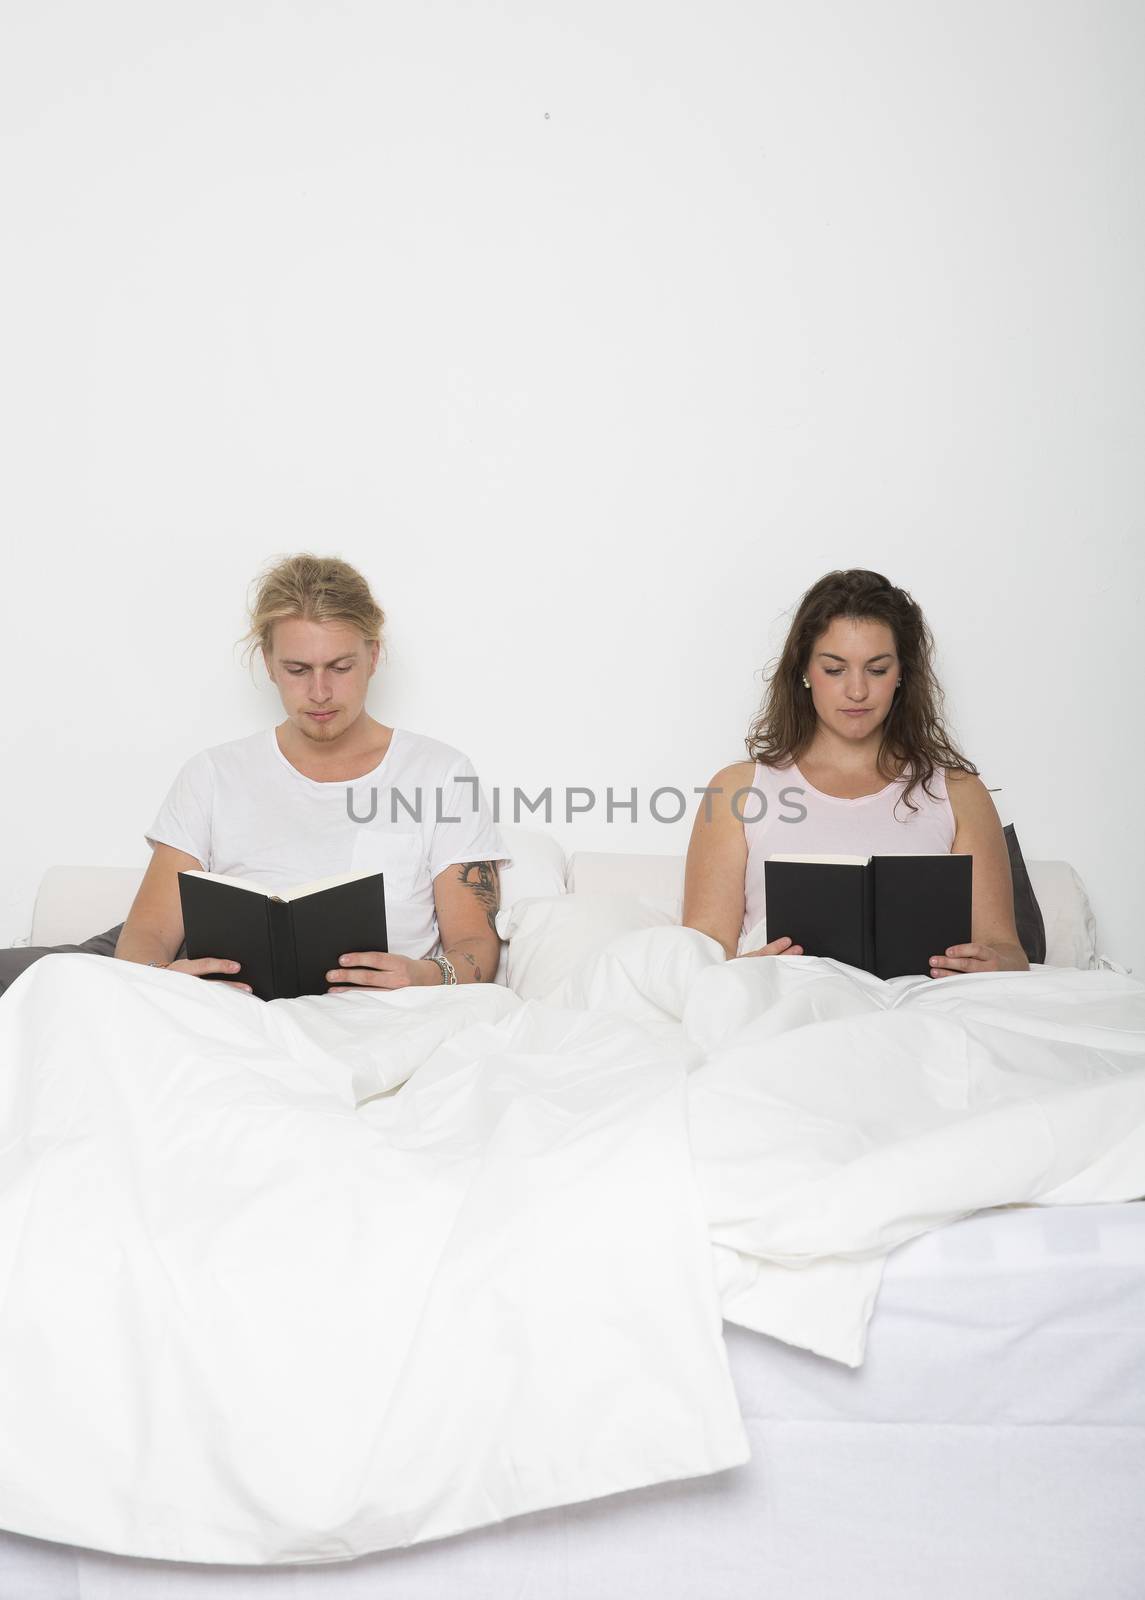 Hetereosexuel couple reading books in bed